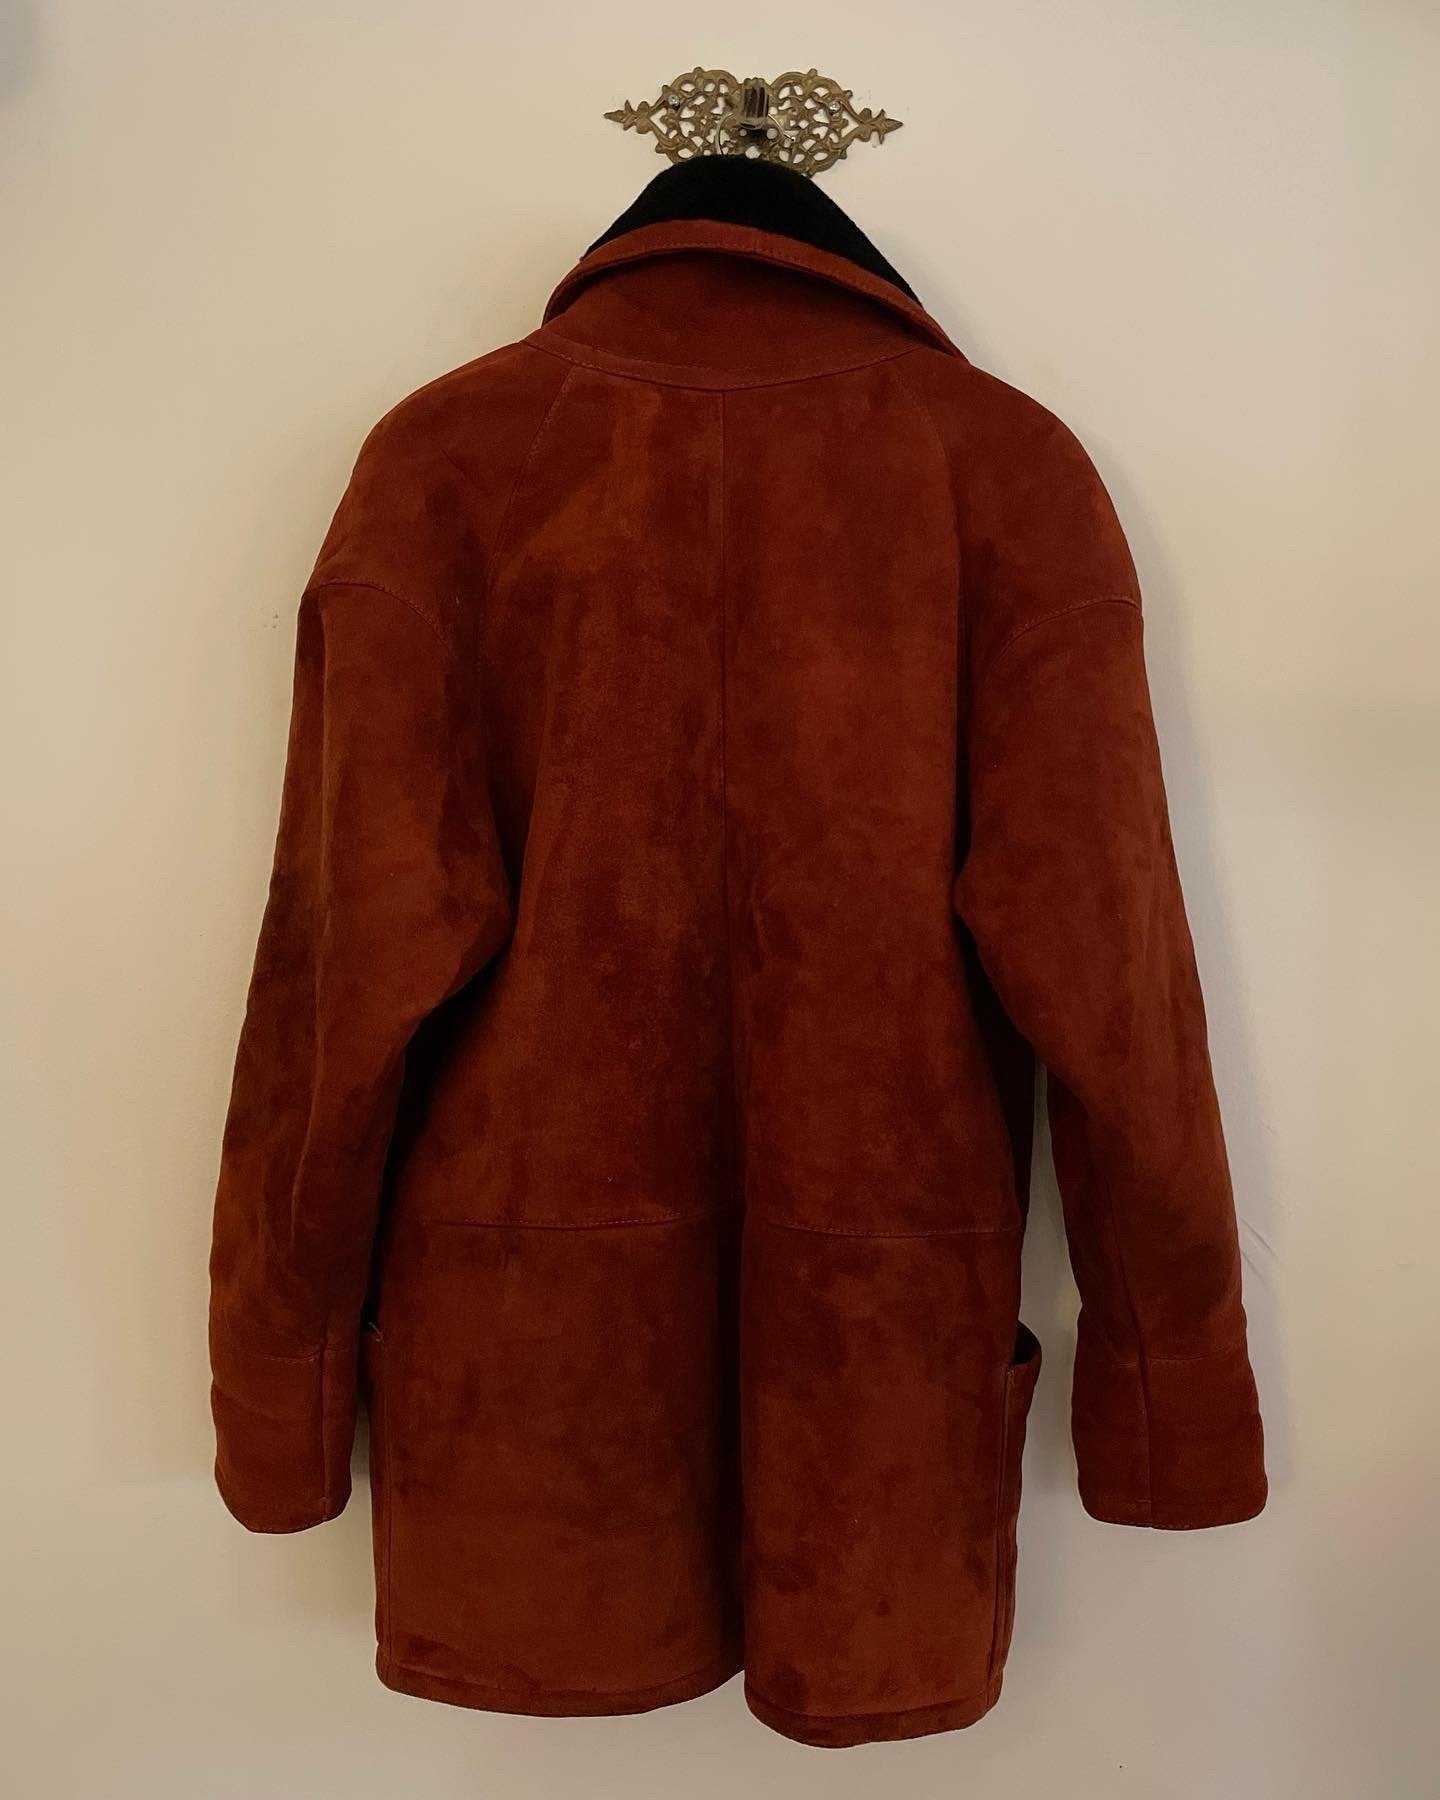 Shearlingcoat, vintage